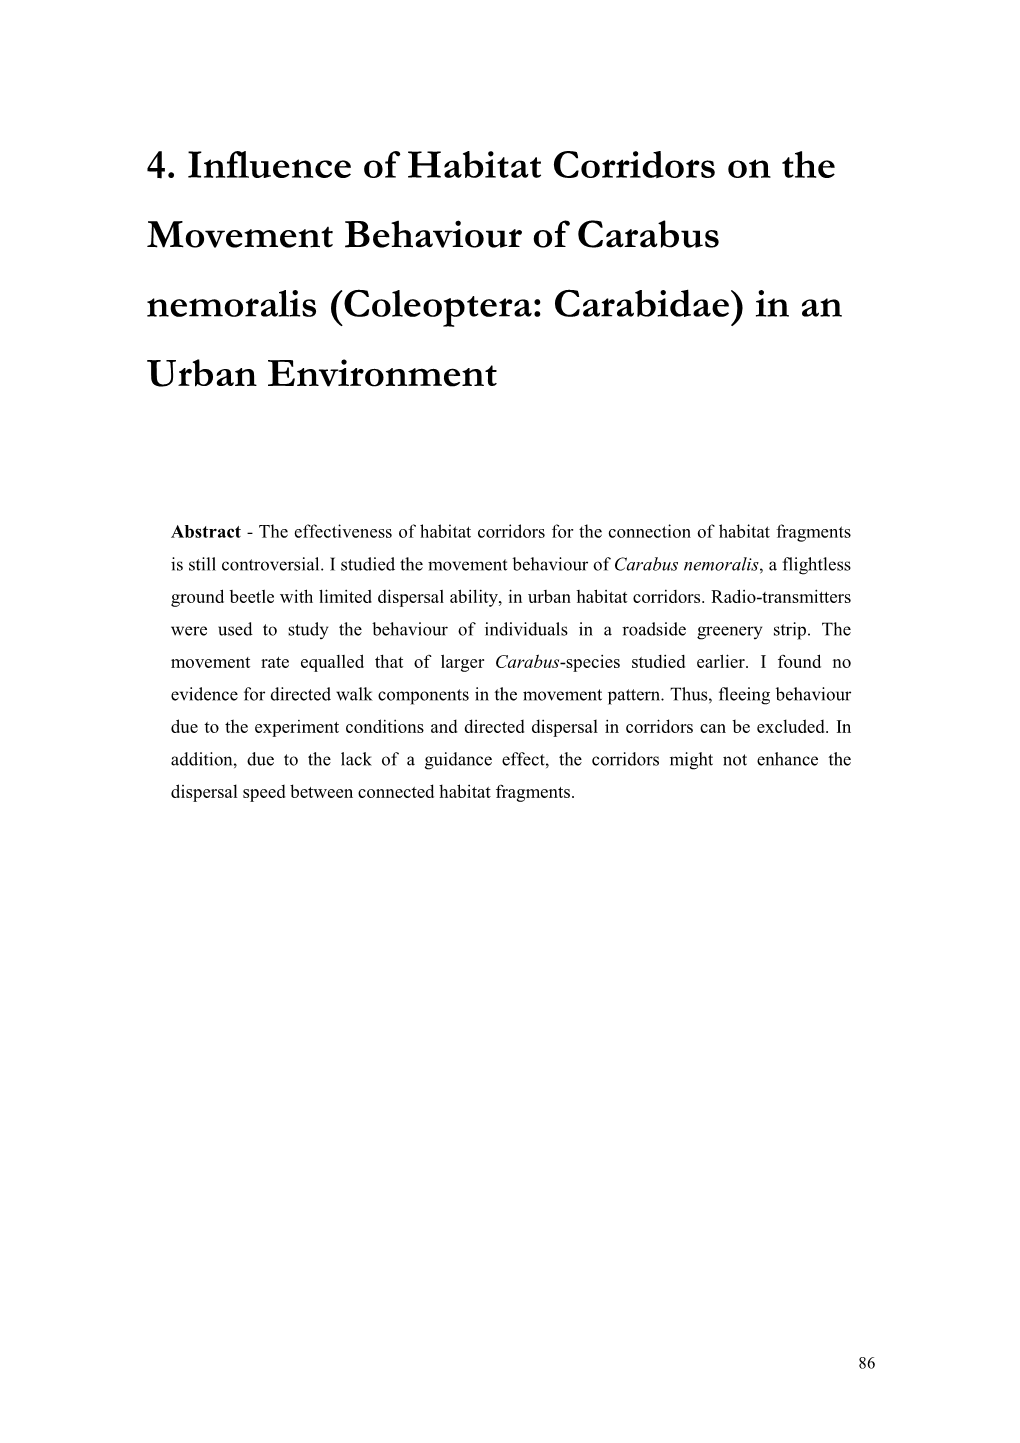 4. Influence of Habitat Corridors on the Movement Behaviour of Carabus Nemoralis (Coleoptera: Carabidae) in an Urban Environment